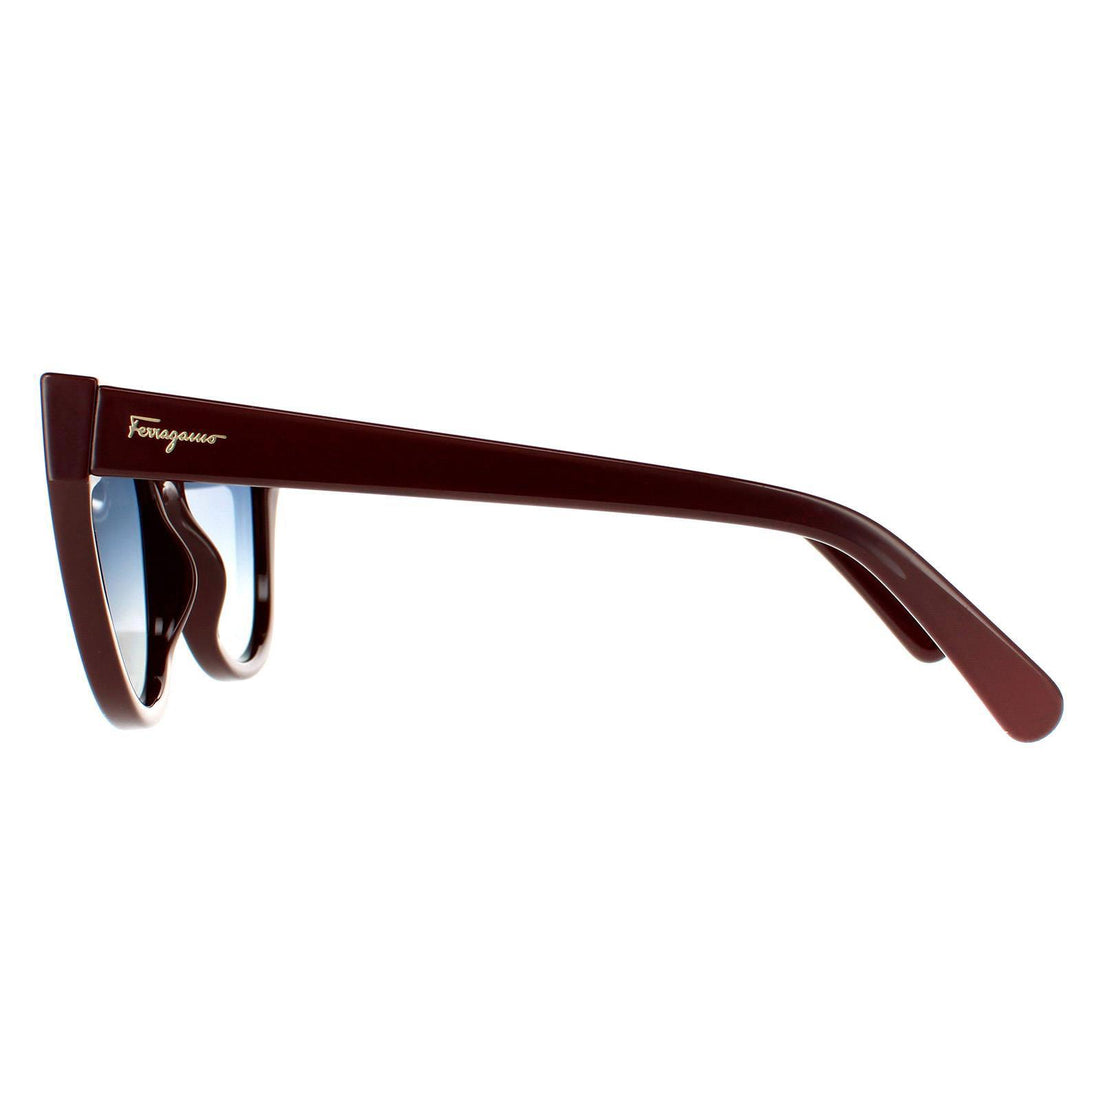 Salvatore Ferragamo Sunglasses SF997S 604 Burgundy Blue Gradient